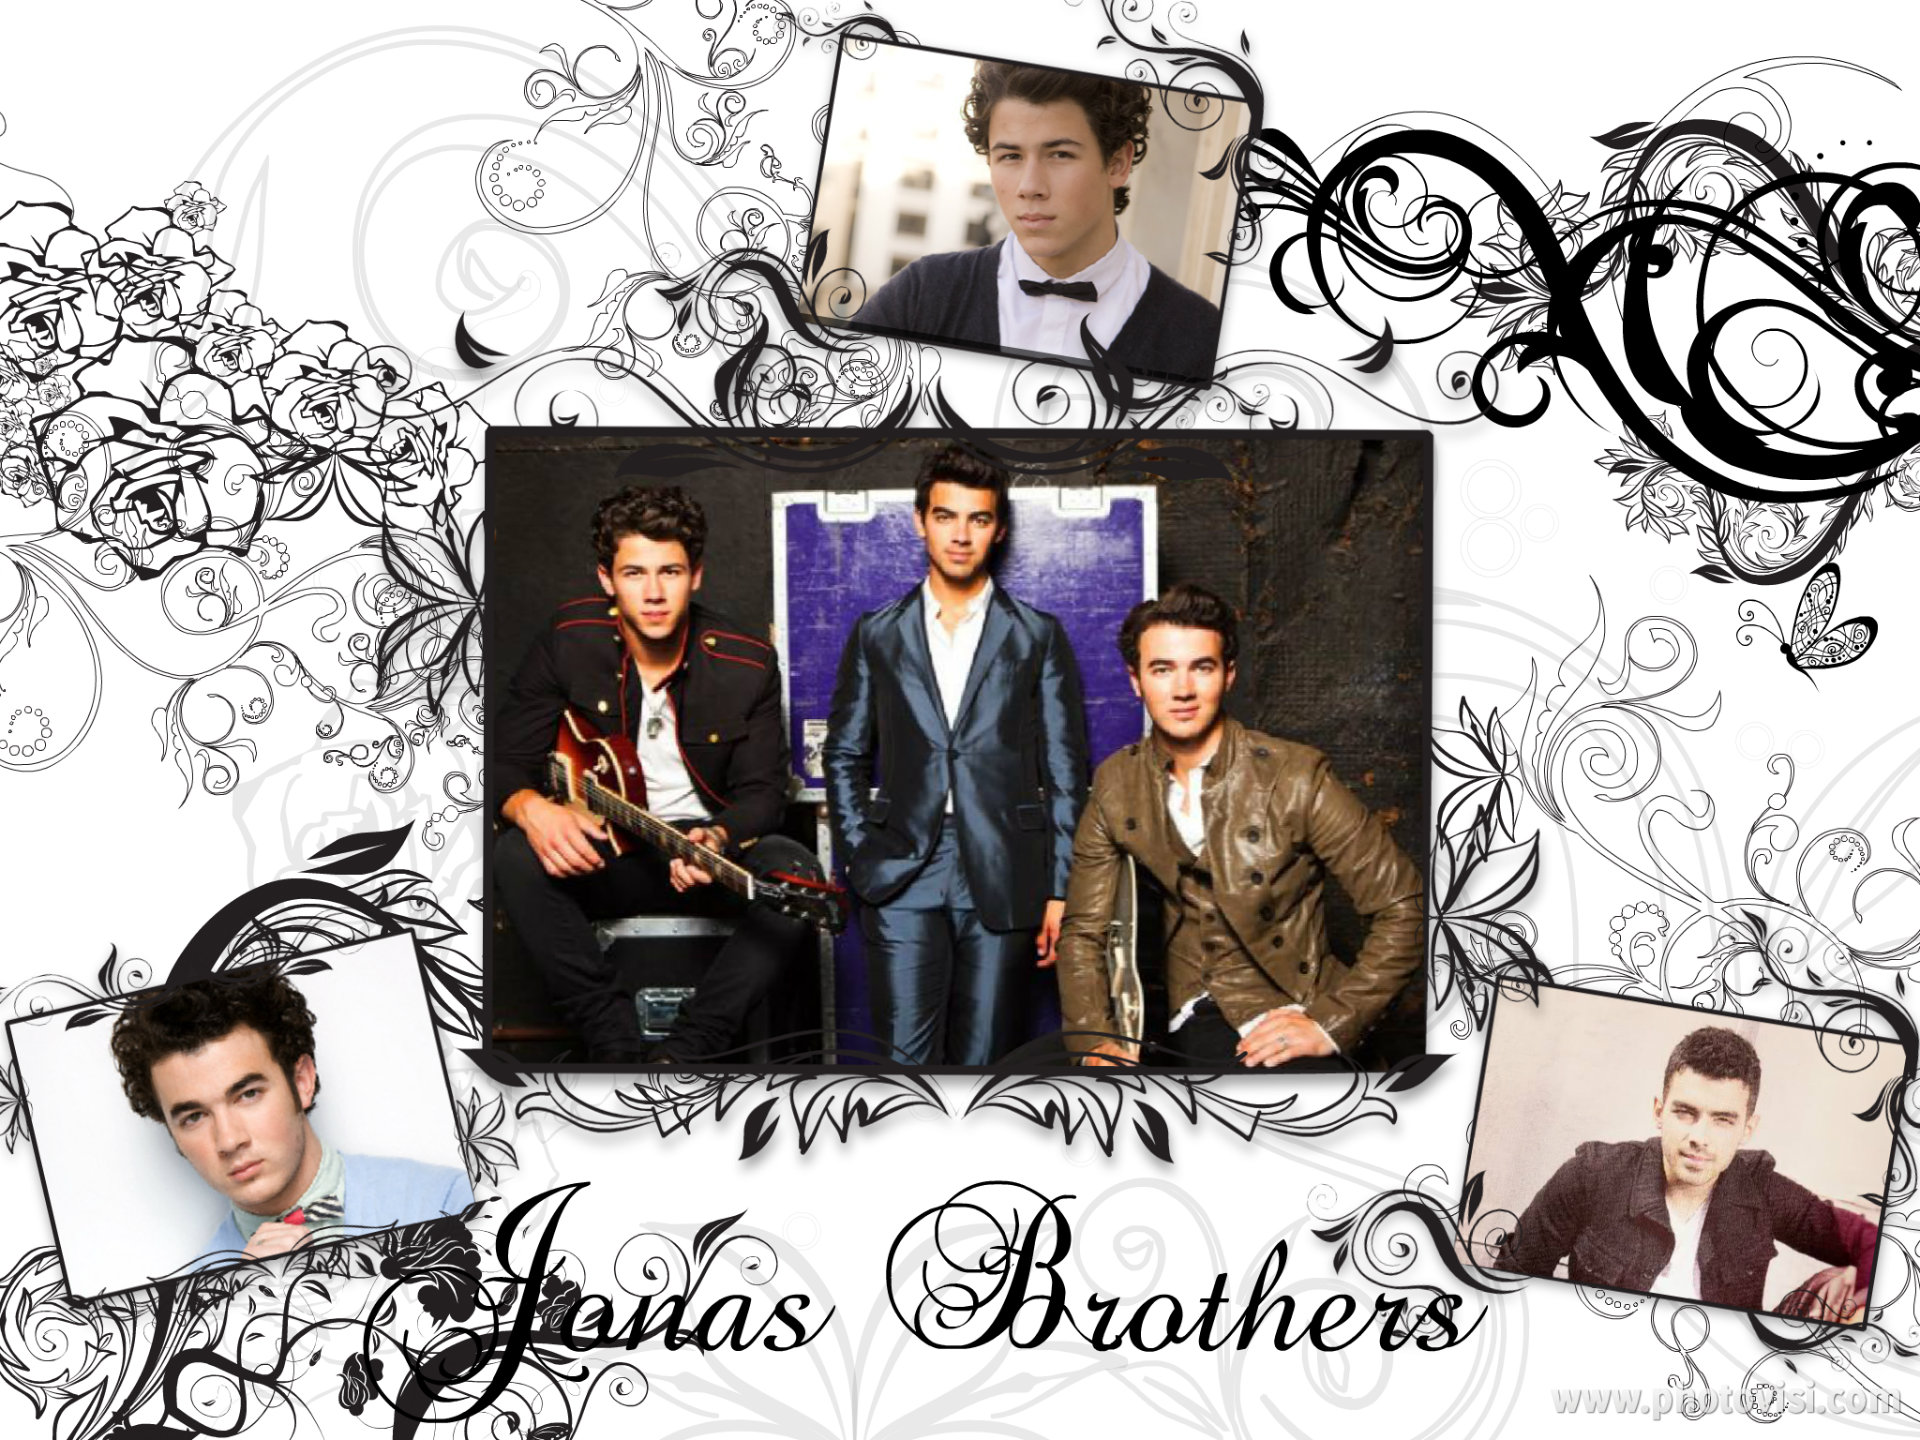 Jonas brothers - The Jonas Brothers Wallpaper 28544020 - Fanpop